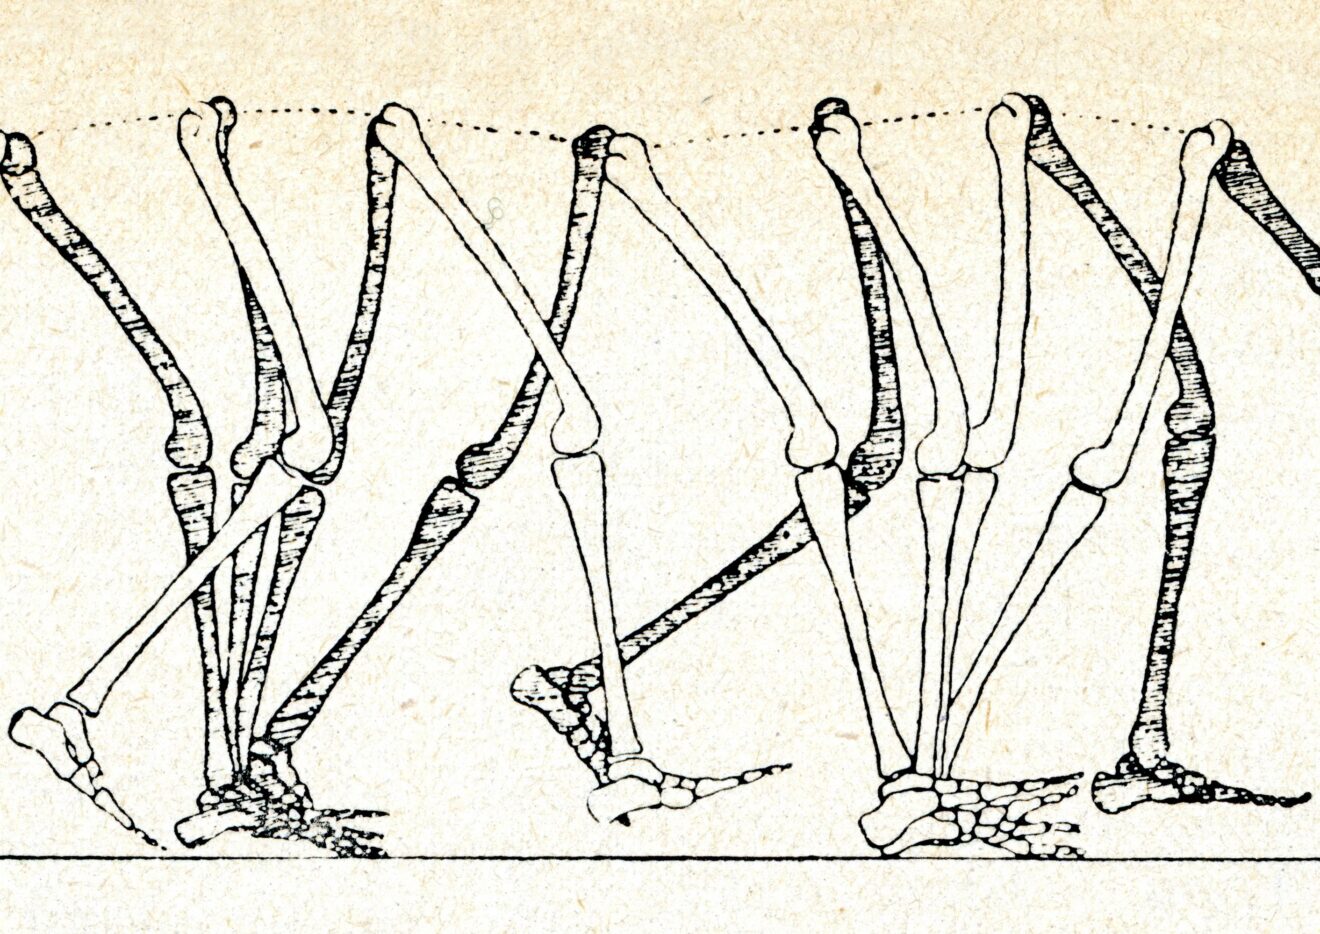 Human walking movements (W. Braune, O. Fisher)